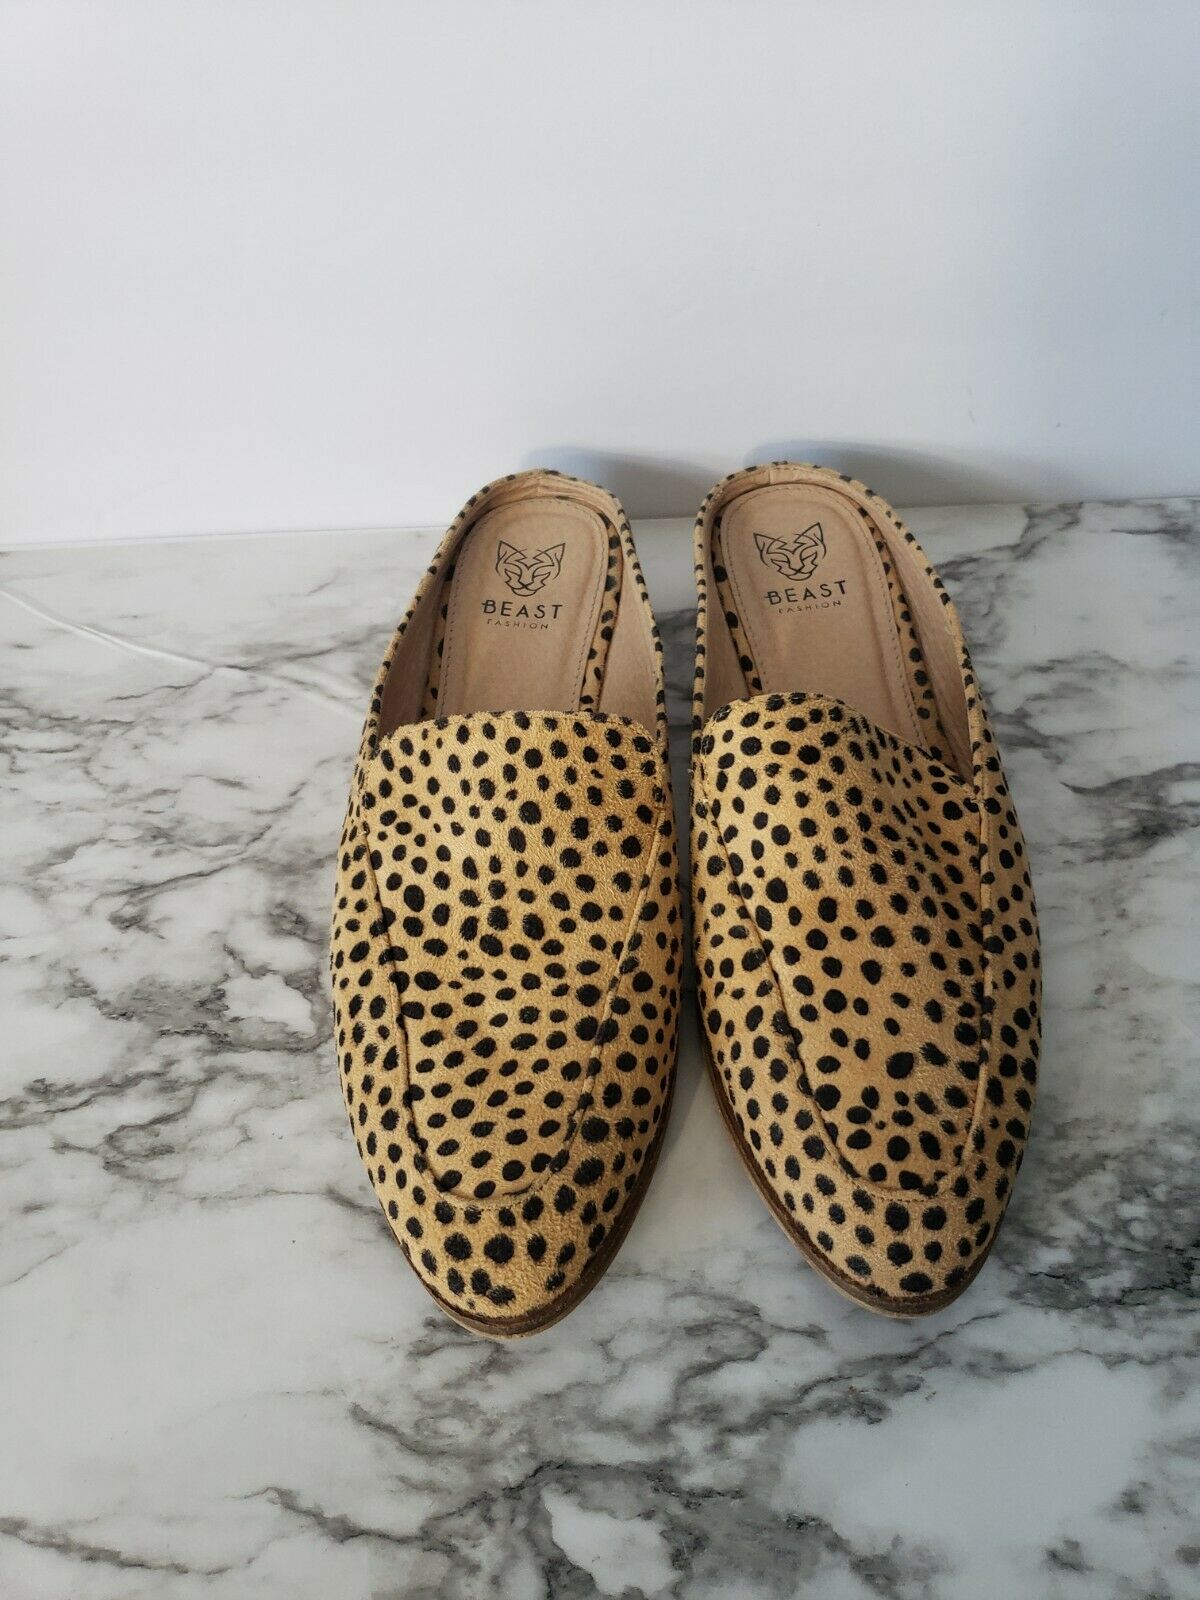 Beast Fashion Leopard Print Mules Flats Suede Women Shoes size 9